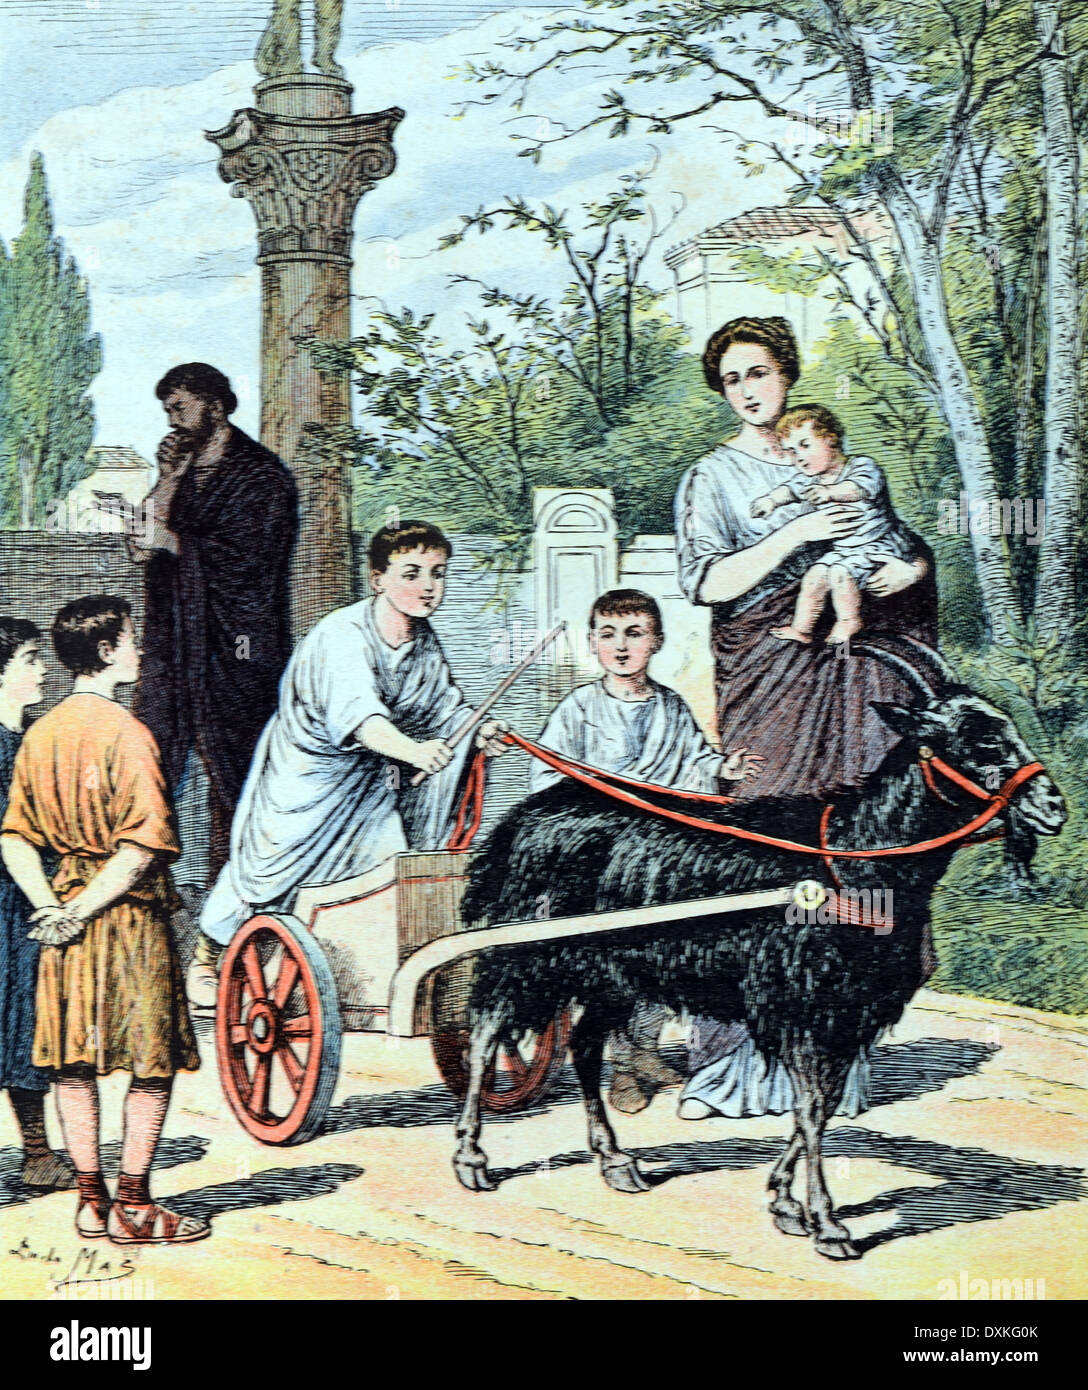 Roma antigua romana Cesta de cabra ilustración c1900 Foto de stock